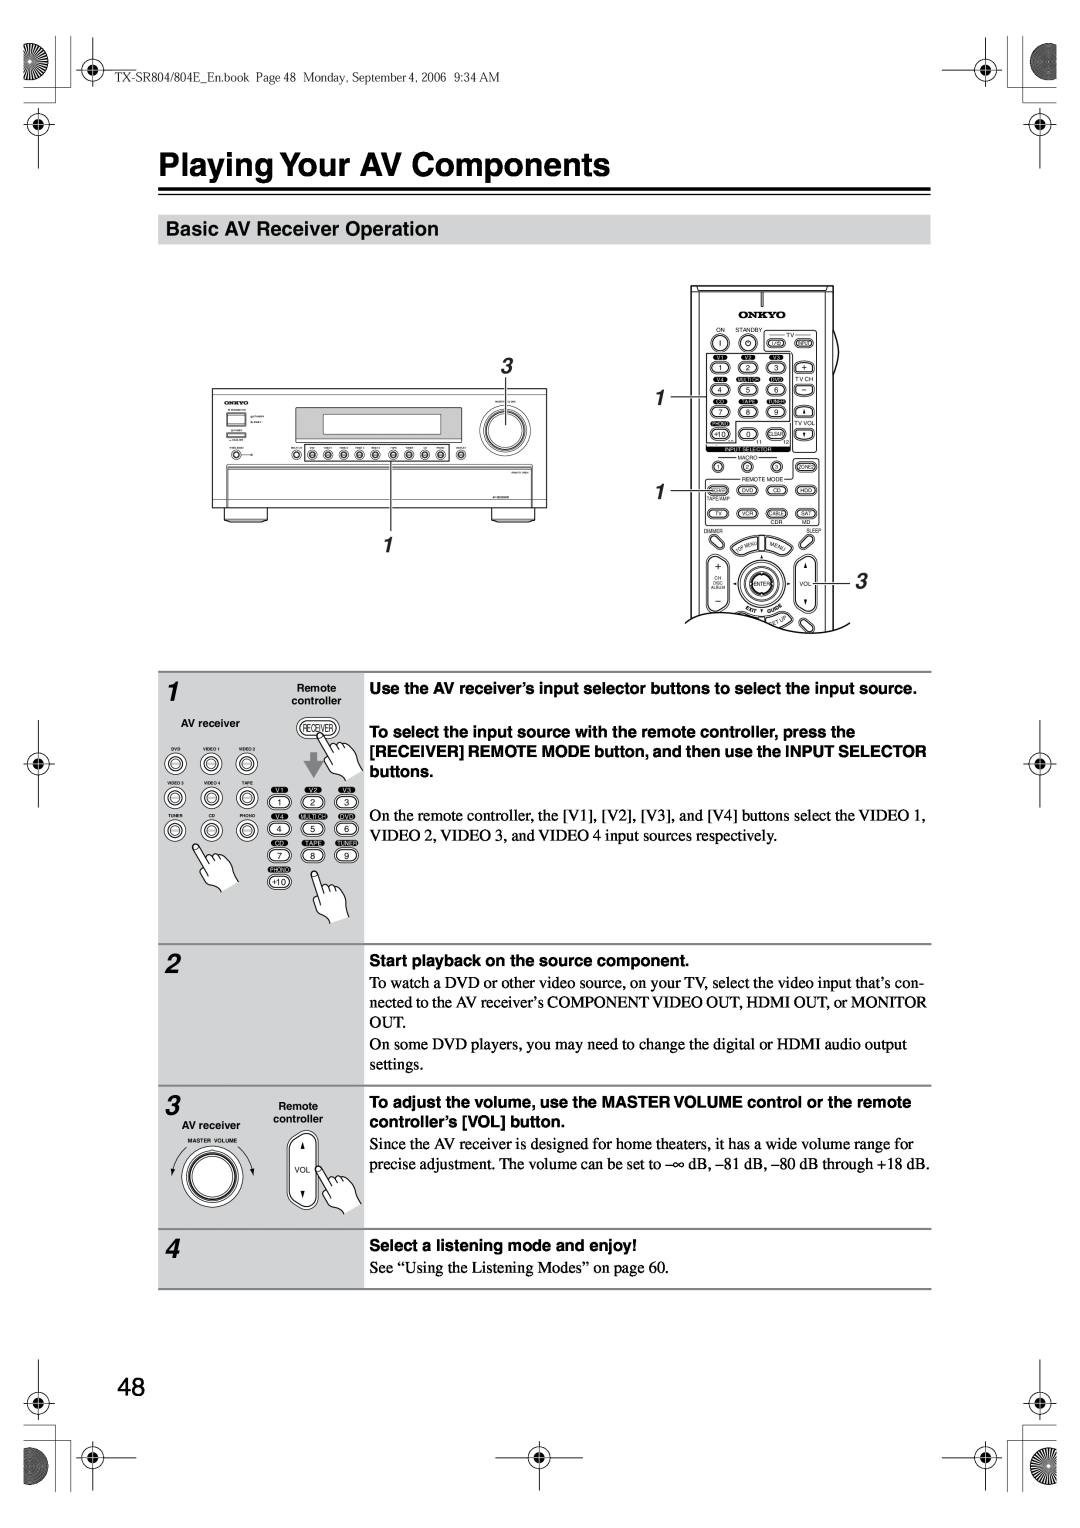 Onkyo TX-SR804E instruction manual Playing Your AV Components, Basic AV Receiver Operation 